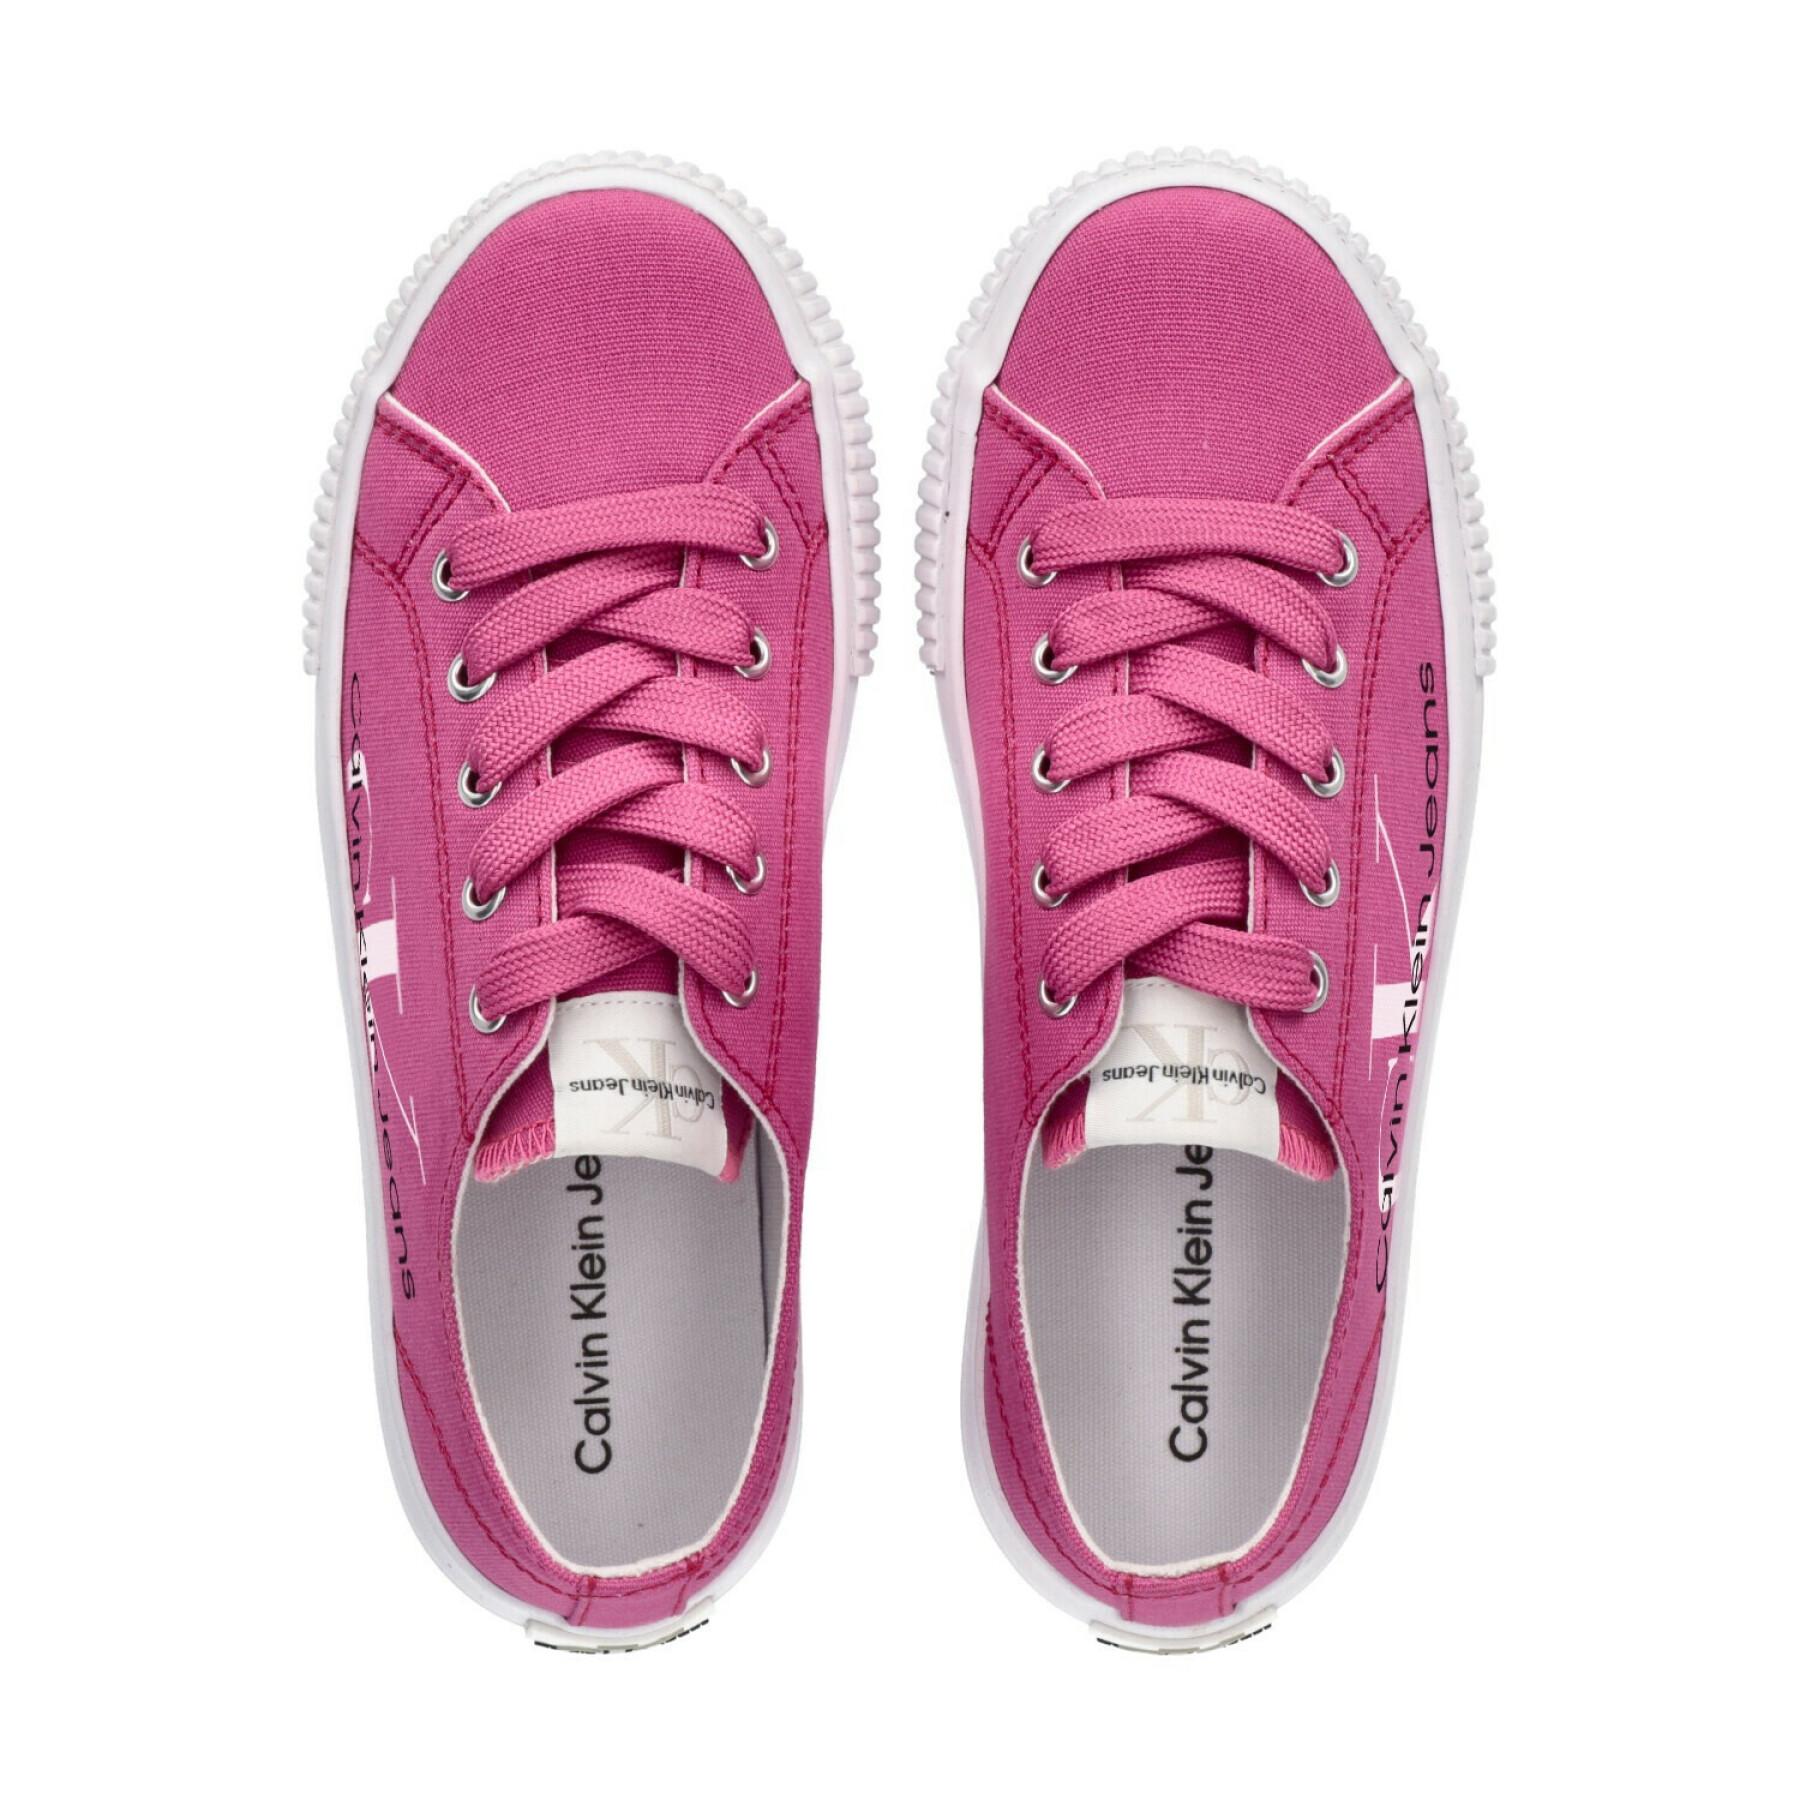 Zapatillas bajas con cordones para niñas Calvin Klein